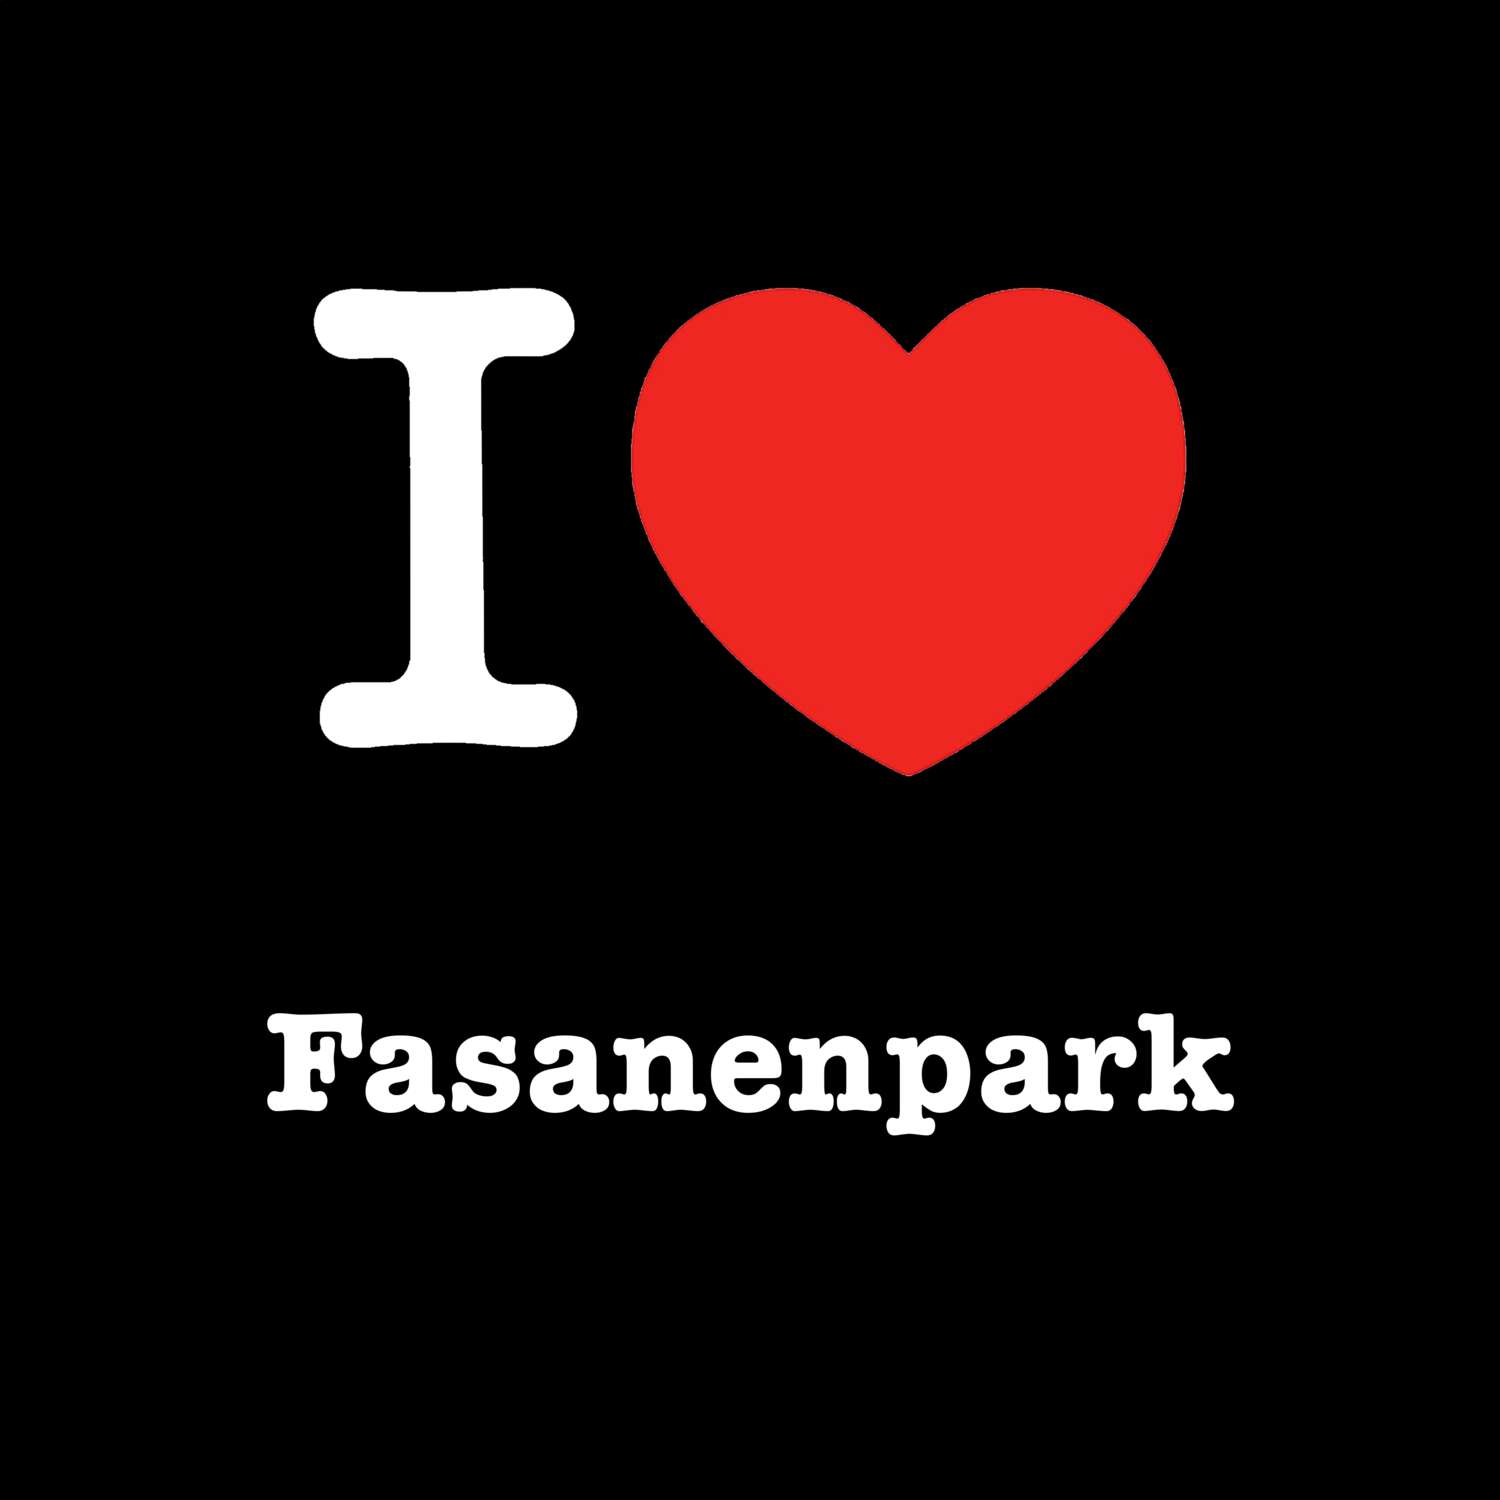 Fasanenpark T-Shirt »I love«